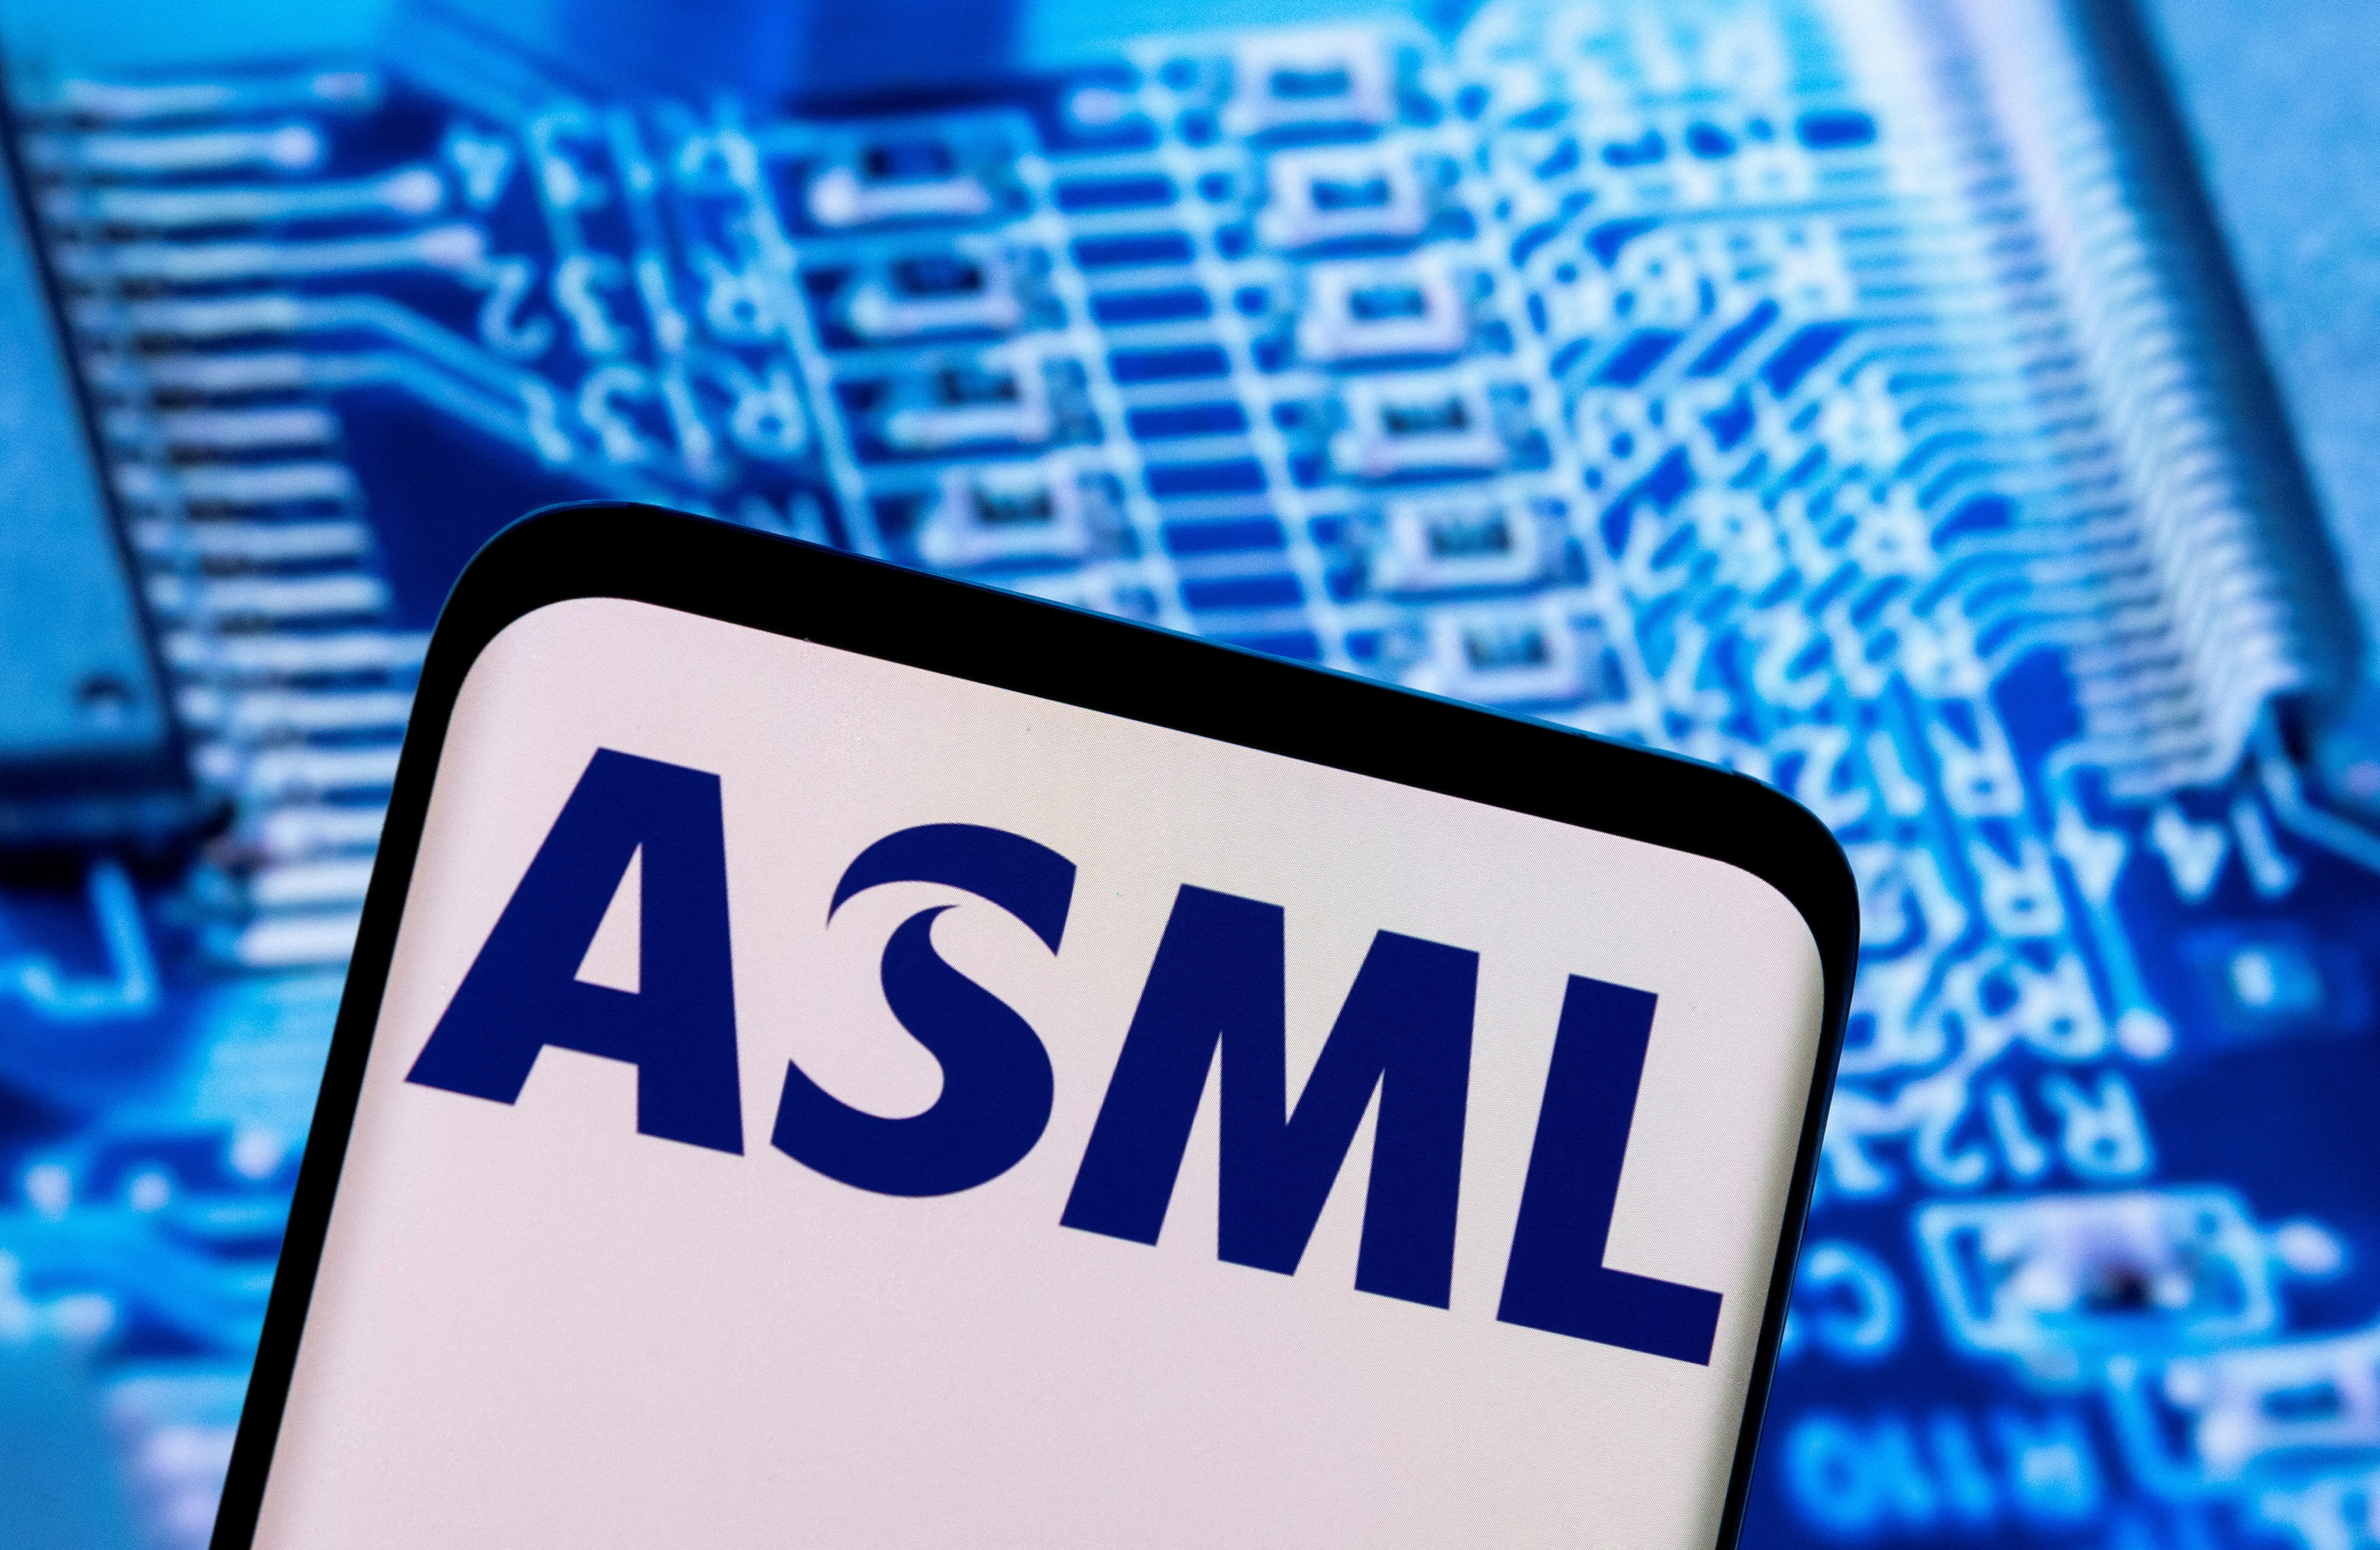 Illustration shows ASML logo